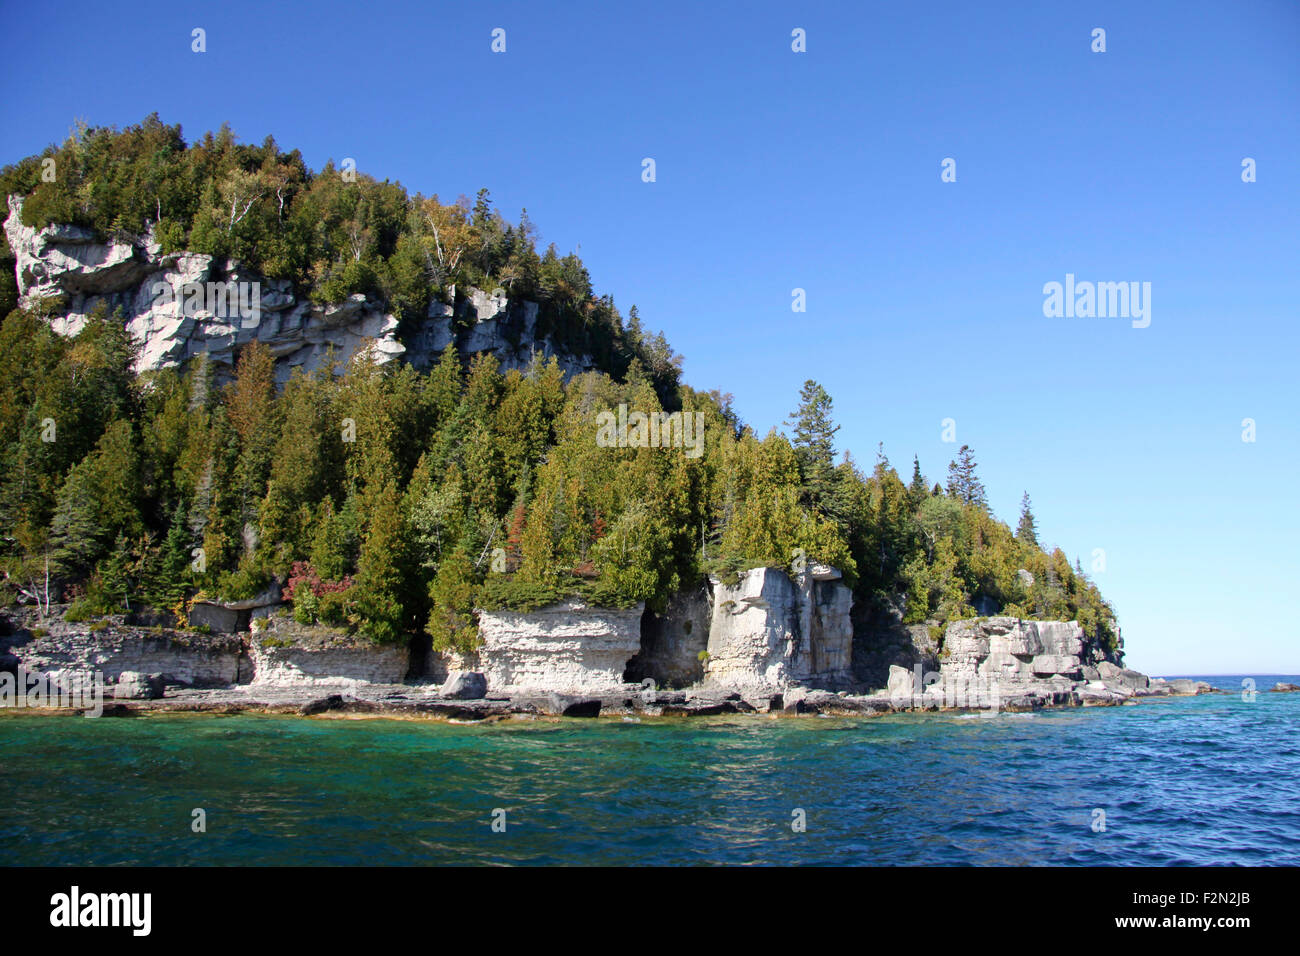 Large flowerpot rock formations (natural sea stacks), Flowerpot Island, Tobermory, Ontario, Canada. Stock Photo